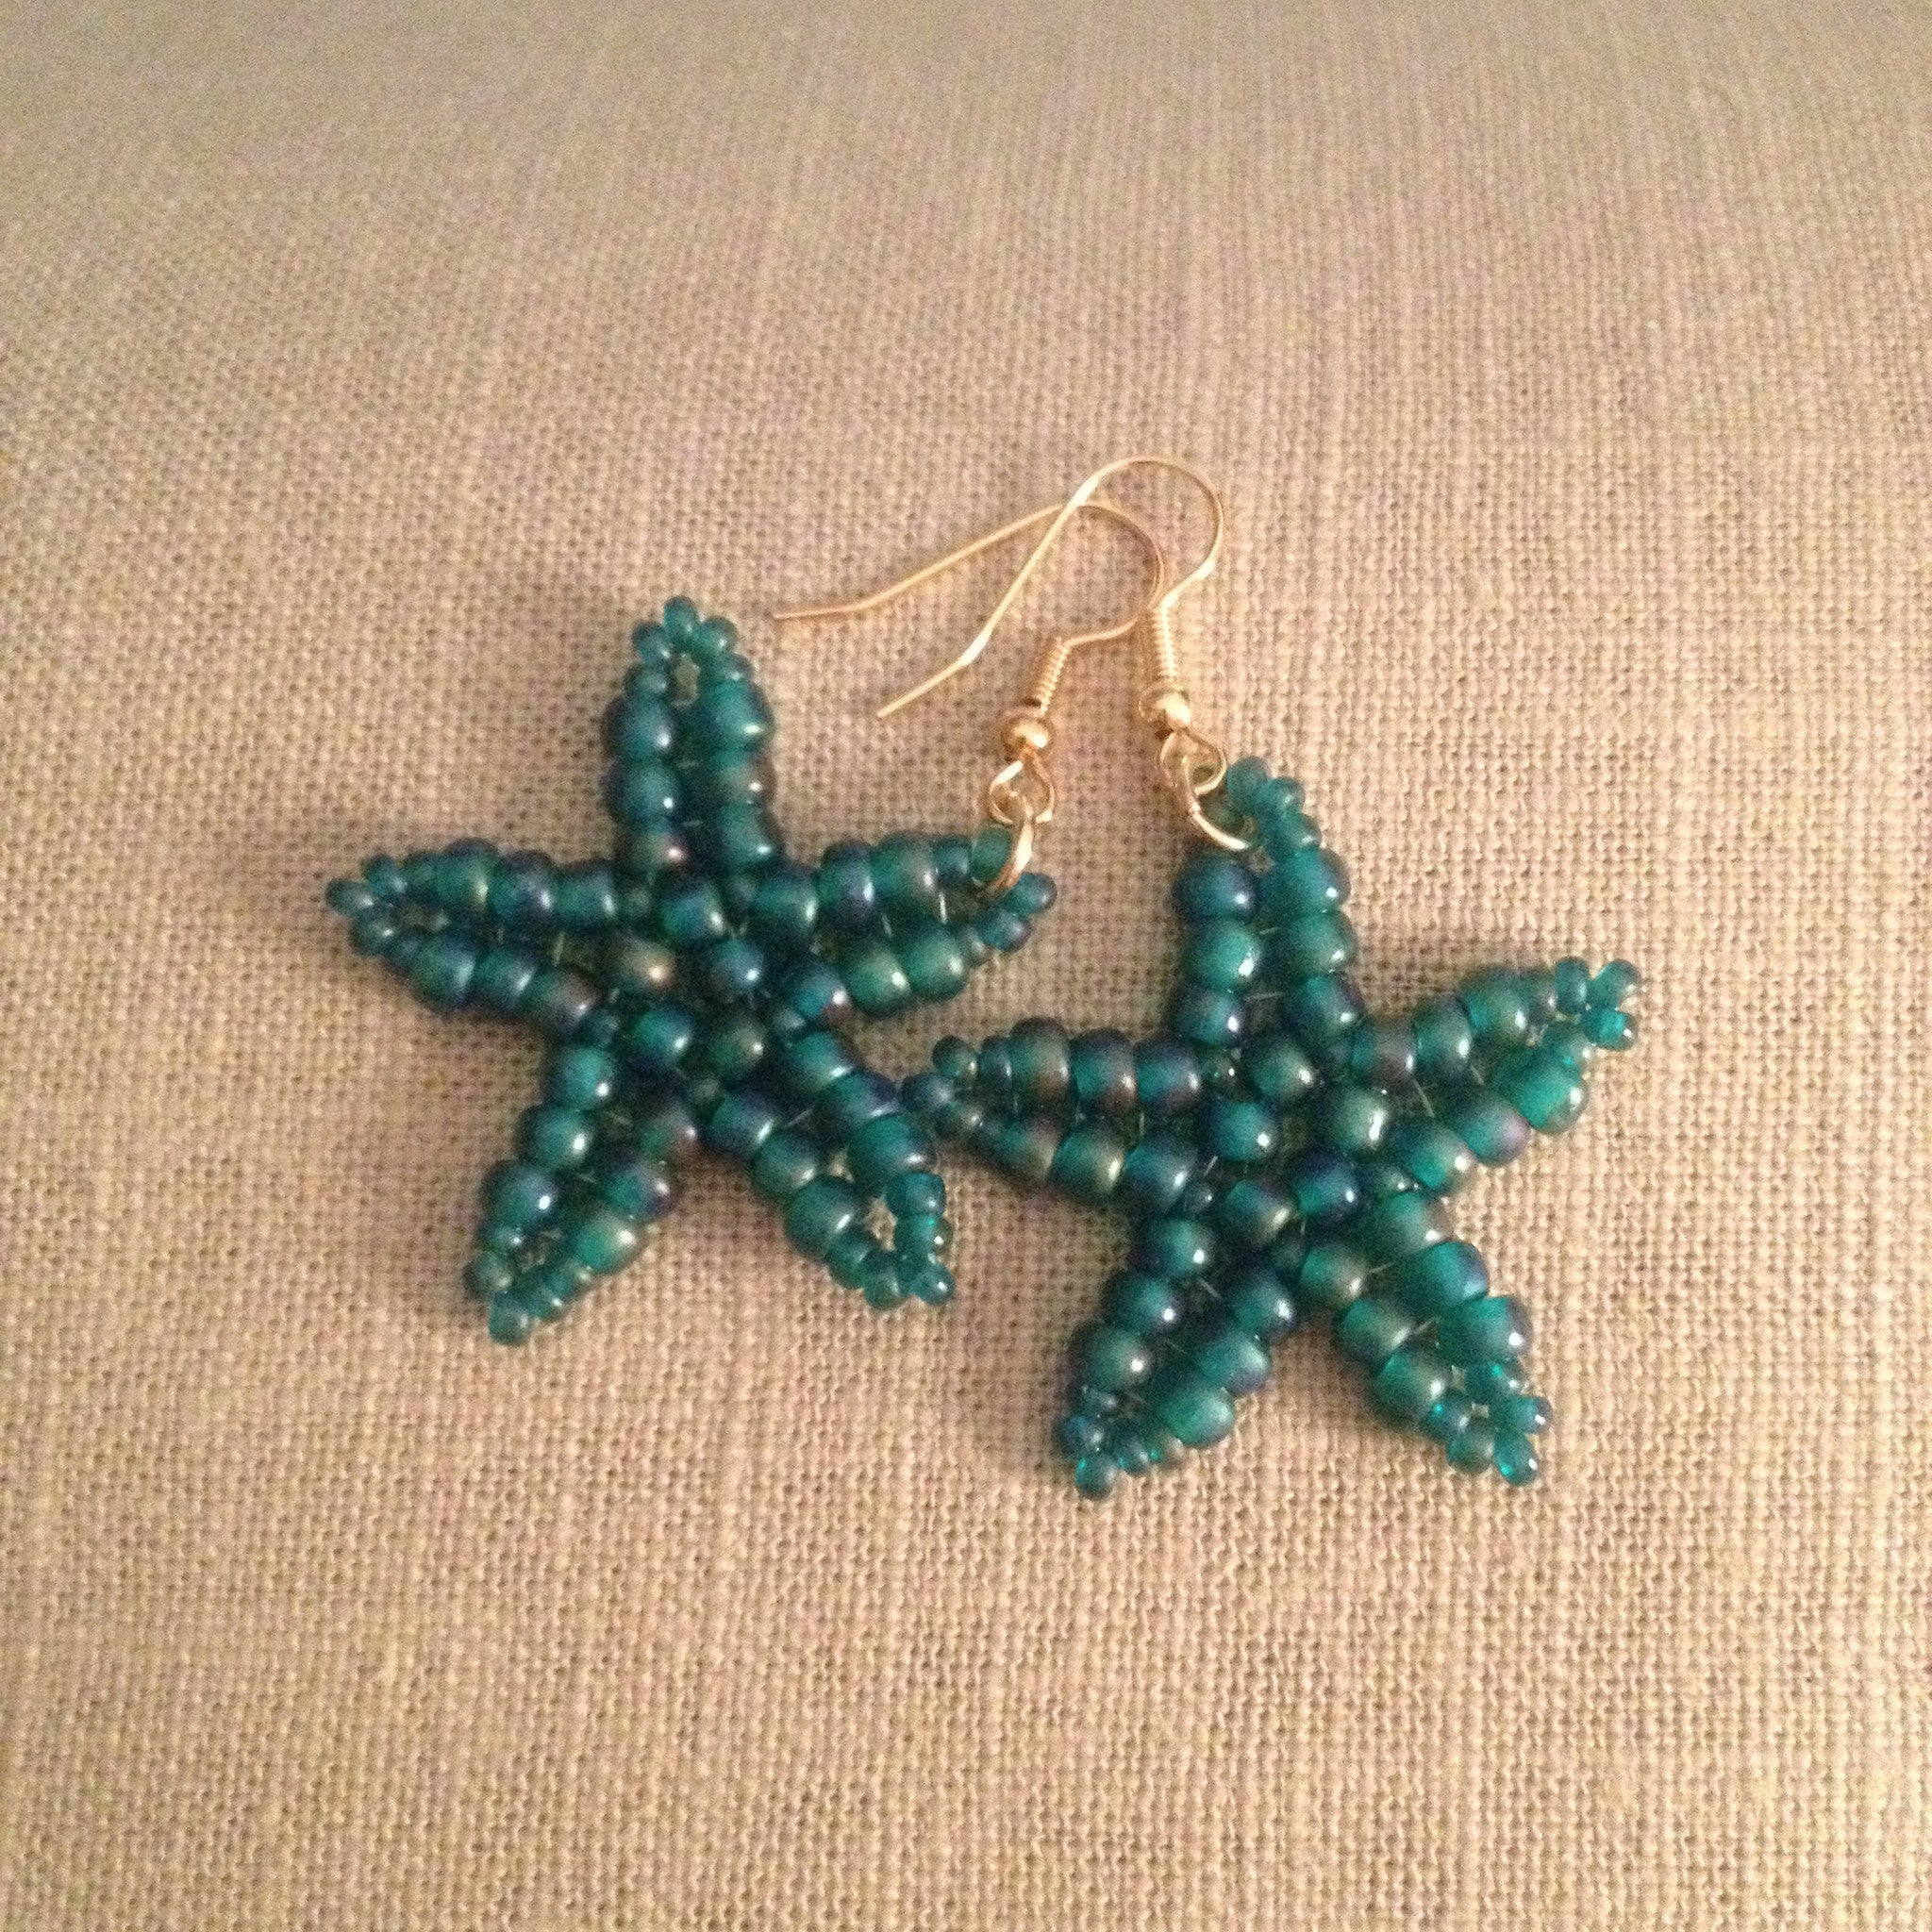 Starfish Handmade beaded earrings green beachy resort cruise wear beachy fun style